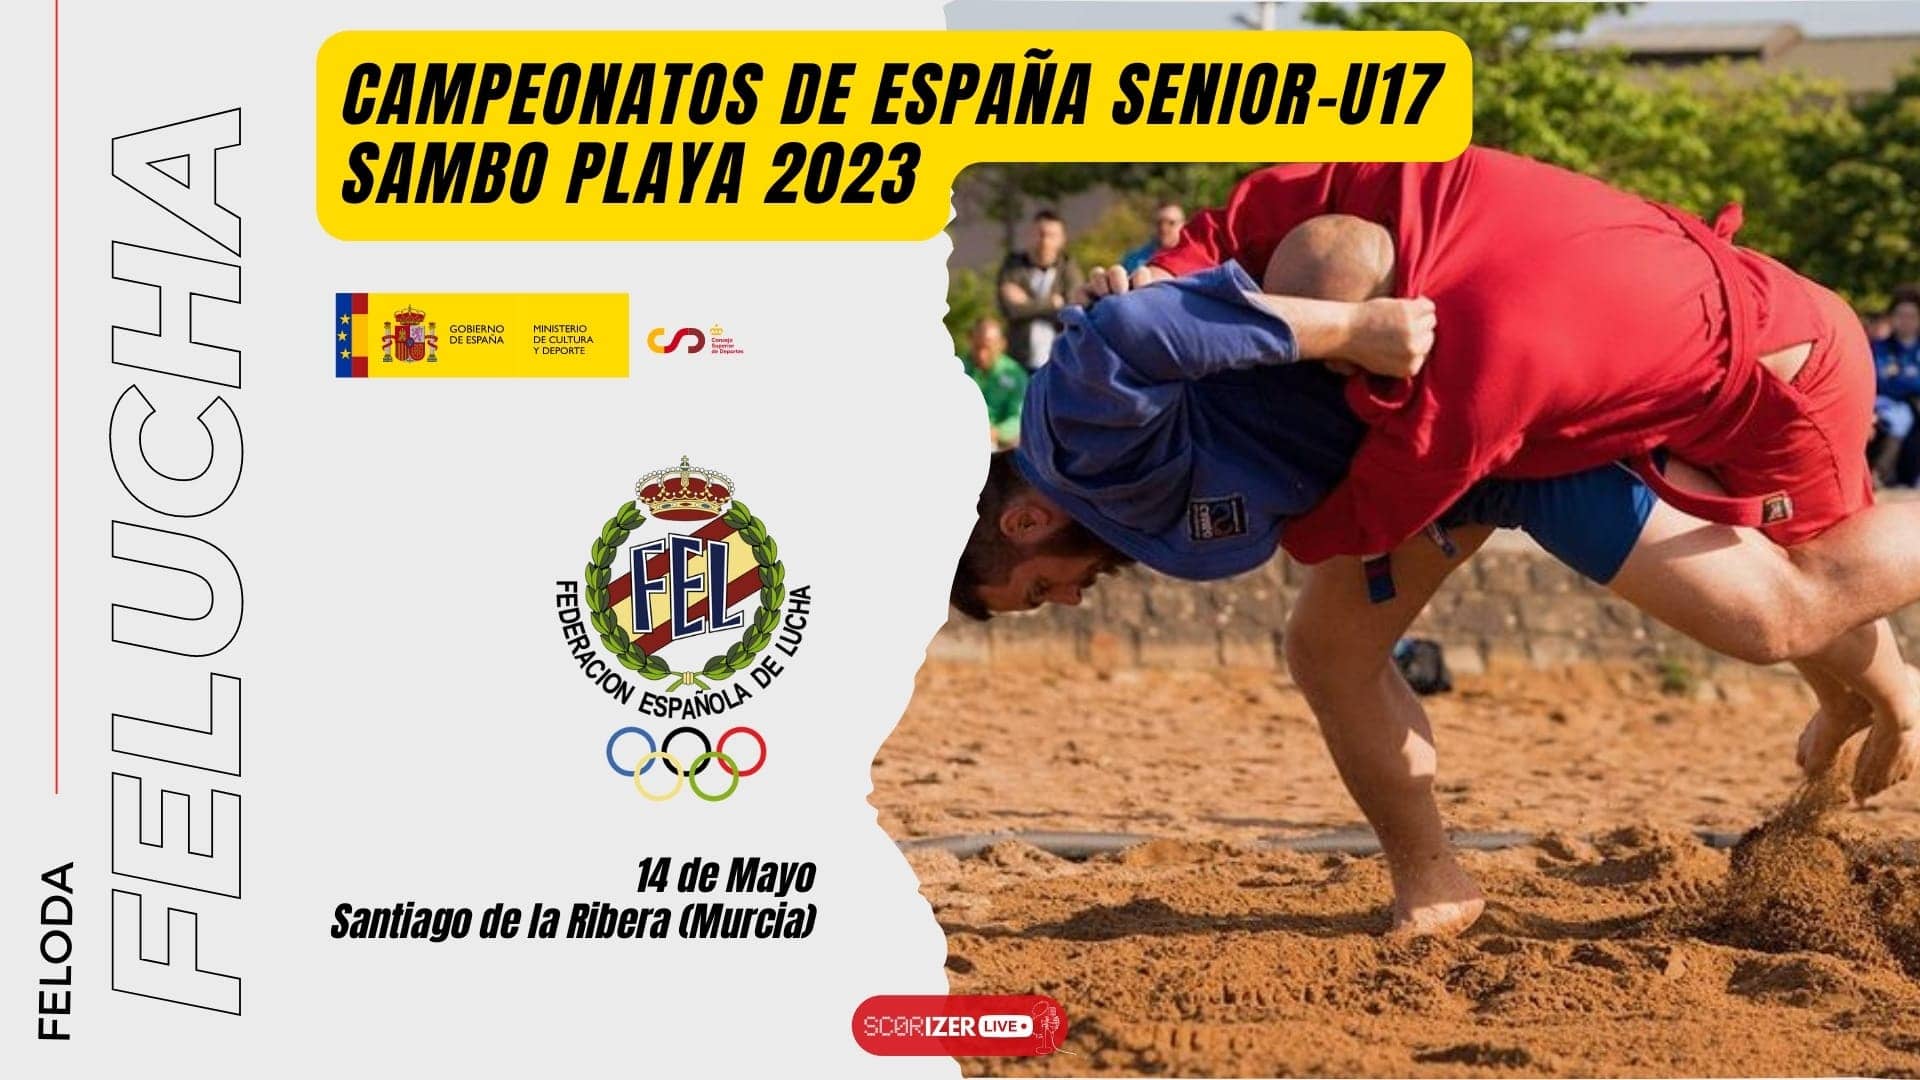 Campeonato de España de Sambo Playa 2023